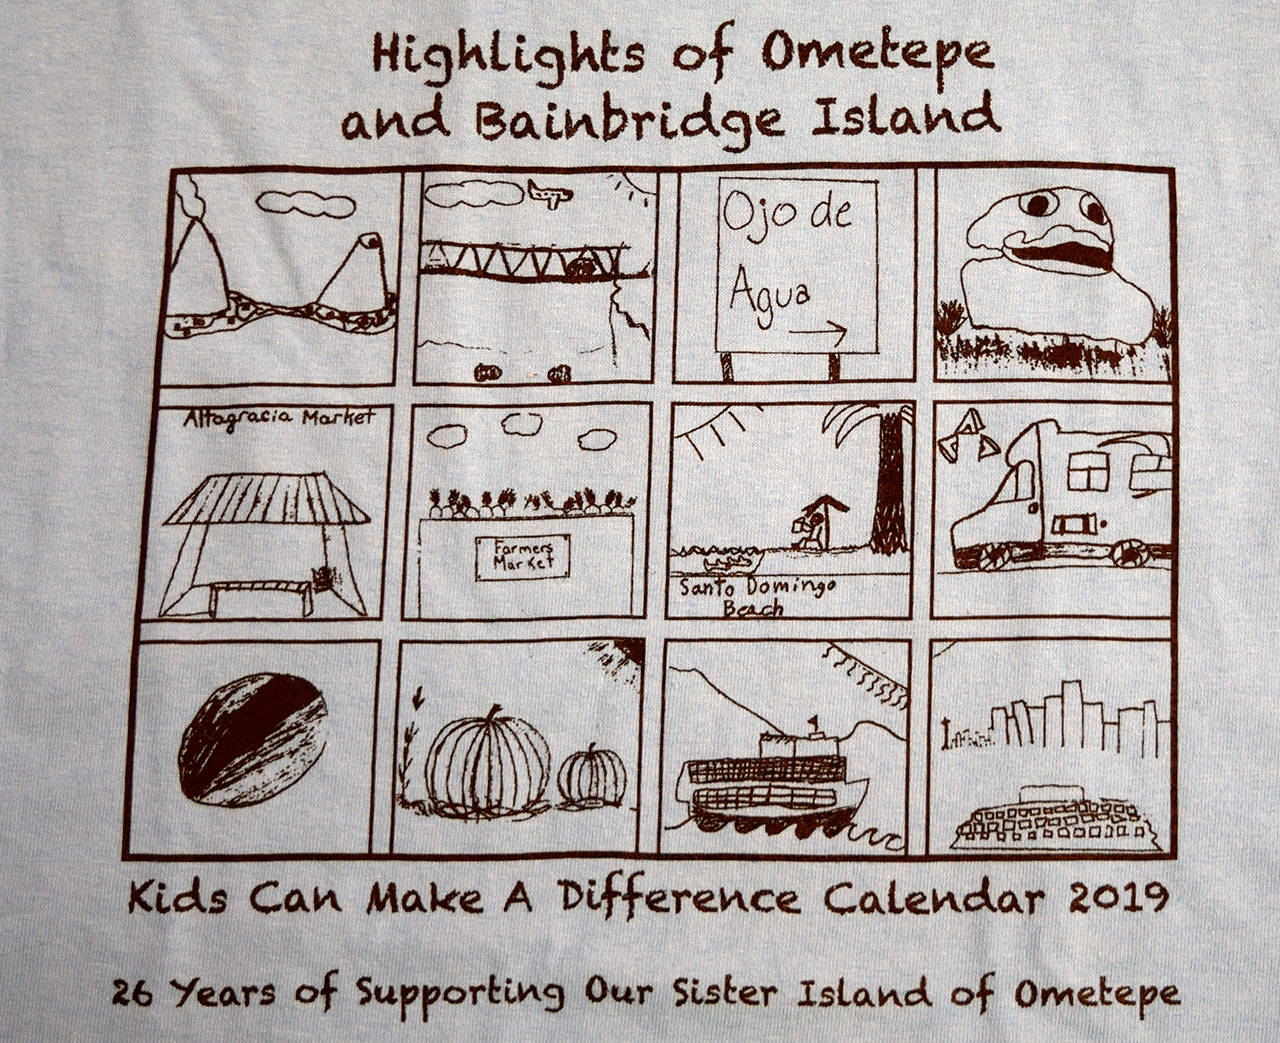 Ometepe benefit calendars on sale this weekend